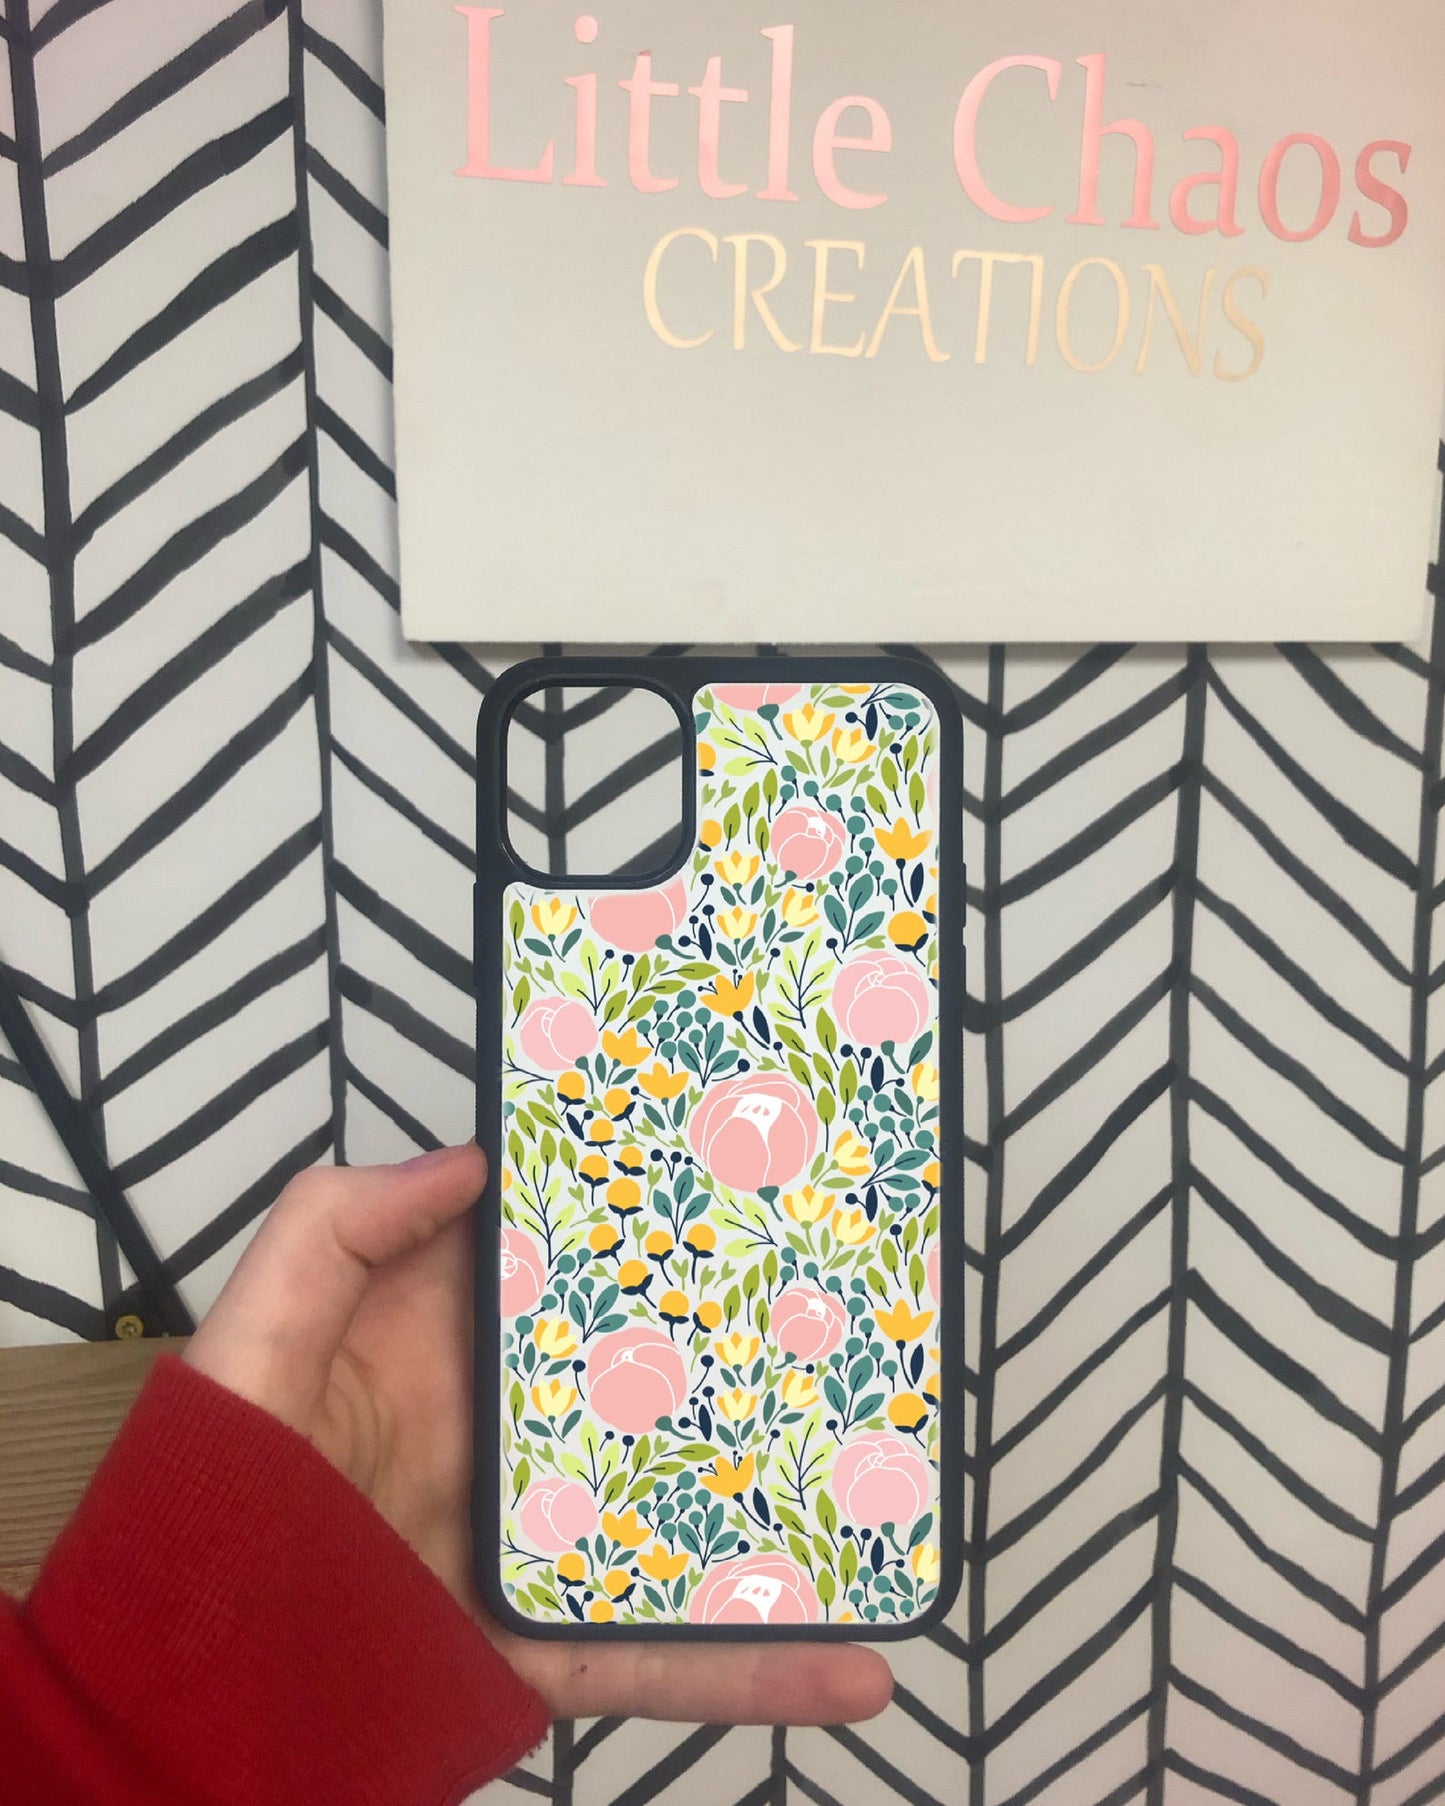 Spring floral phone case